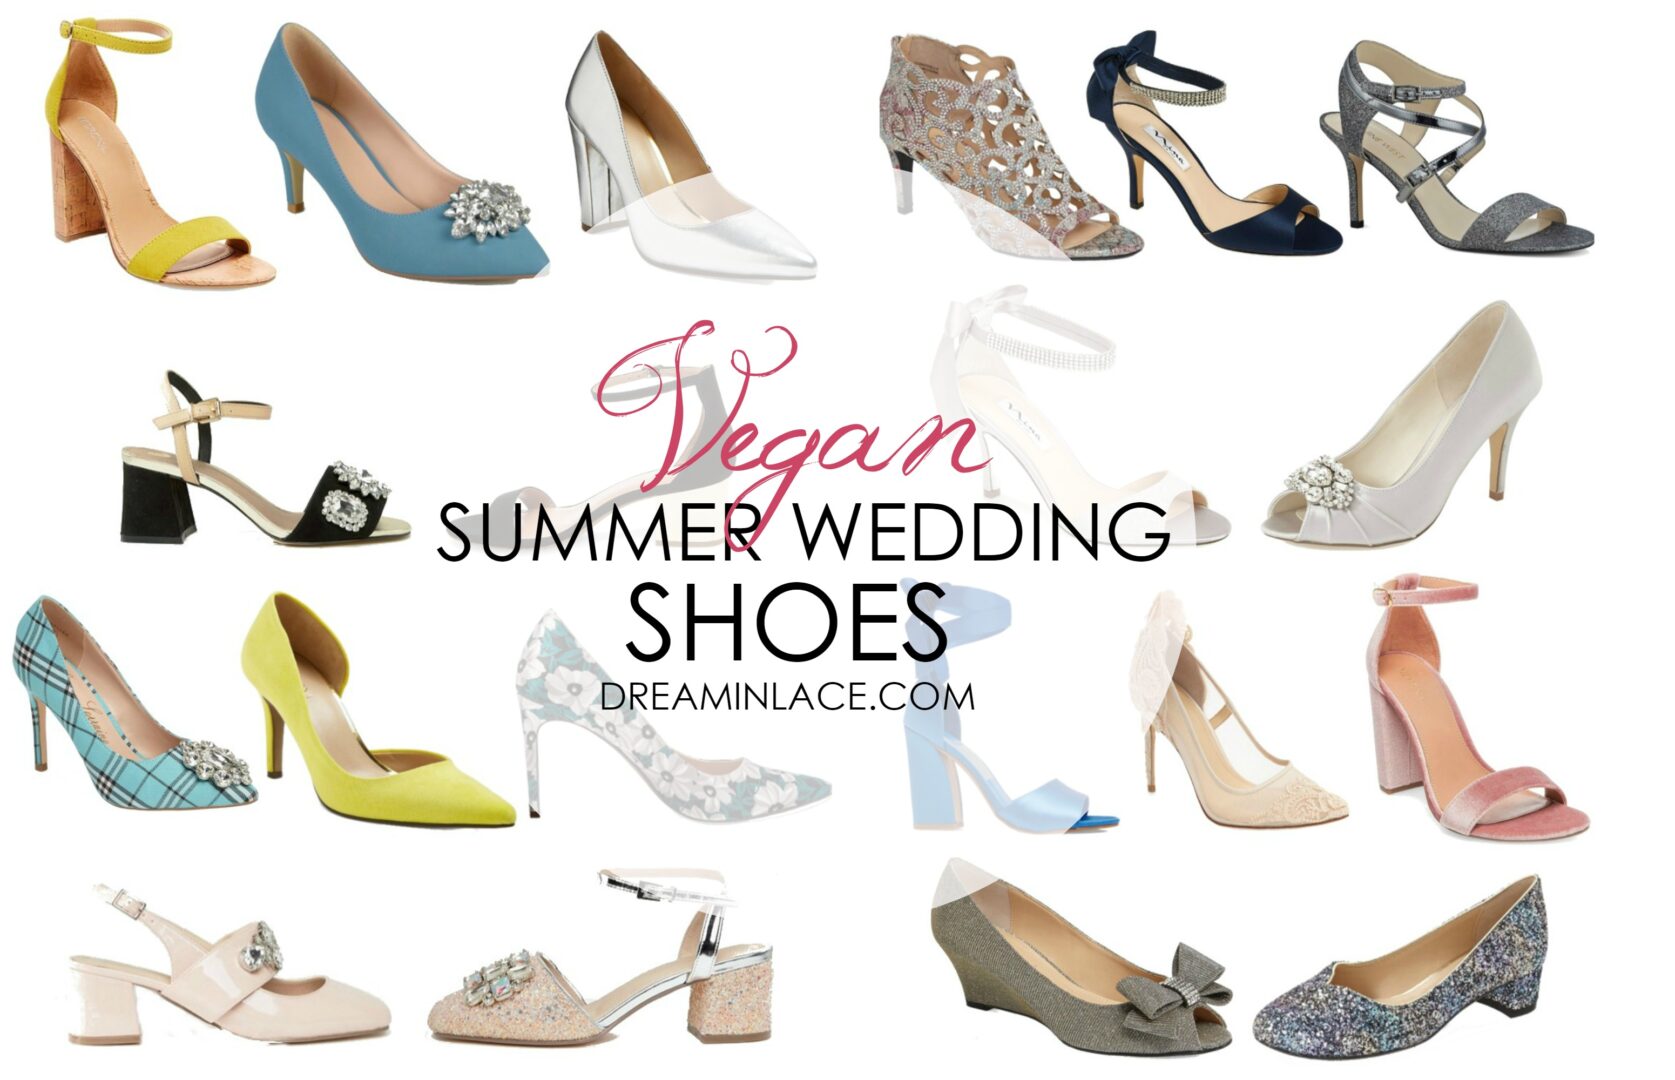 Vegan Wedding Shoes I DreaminLace.com